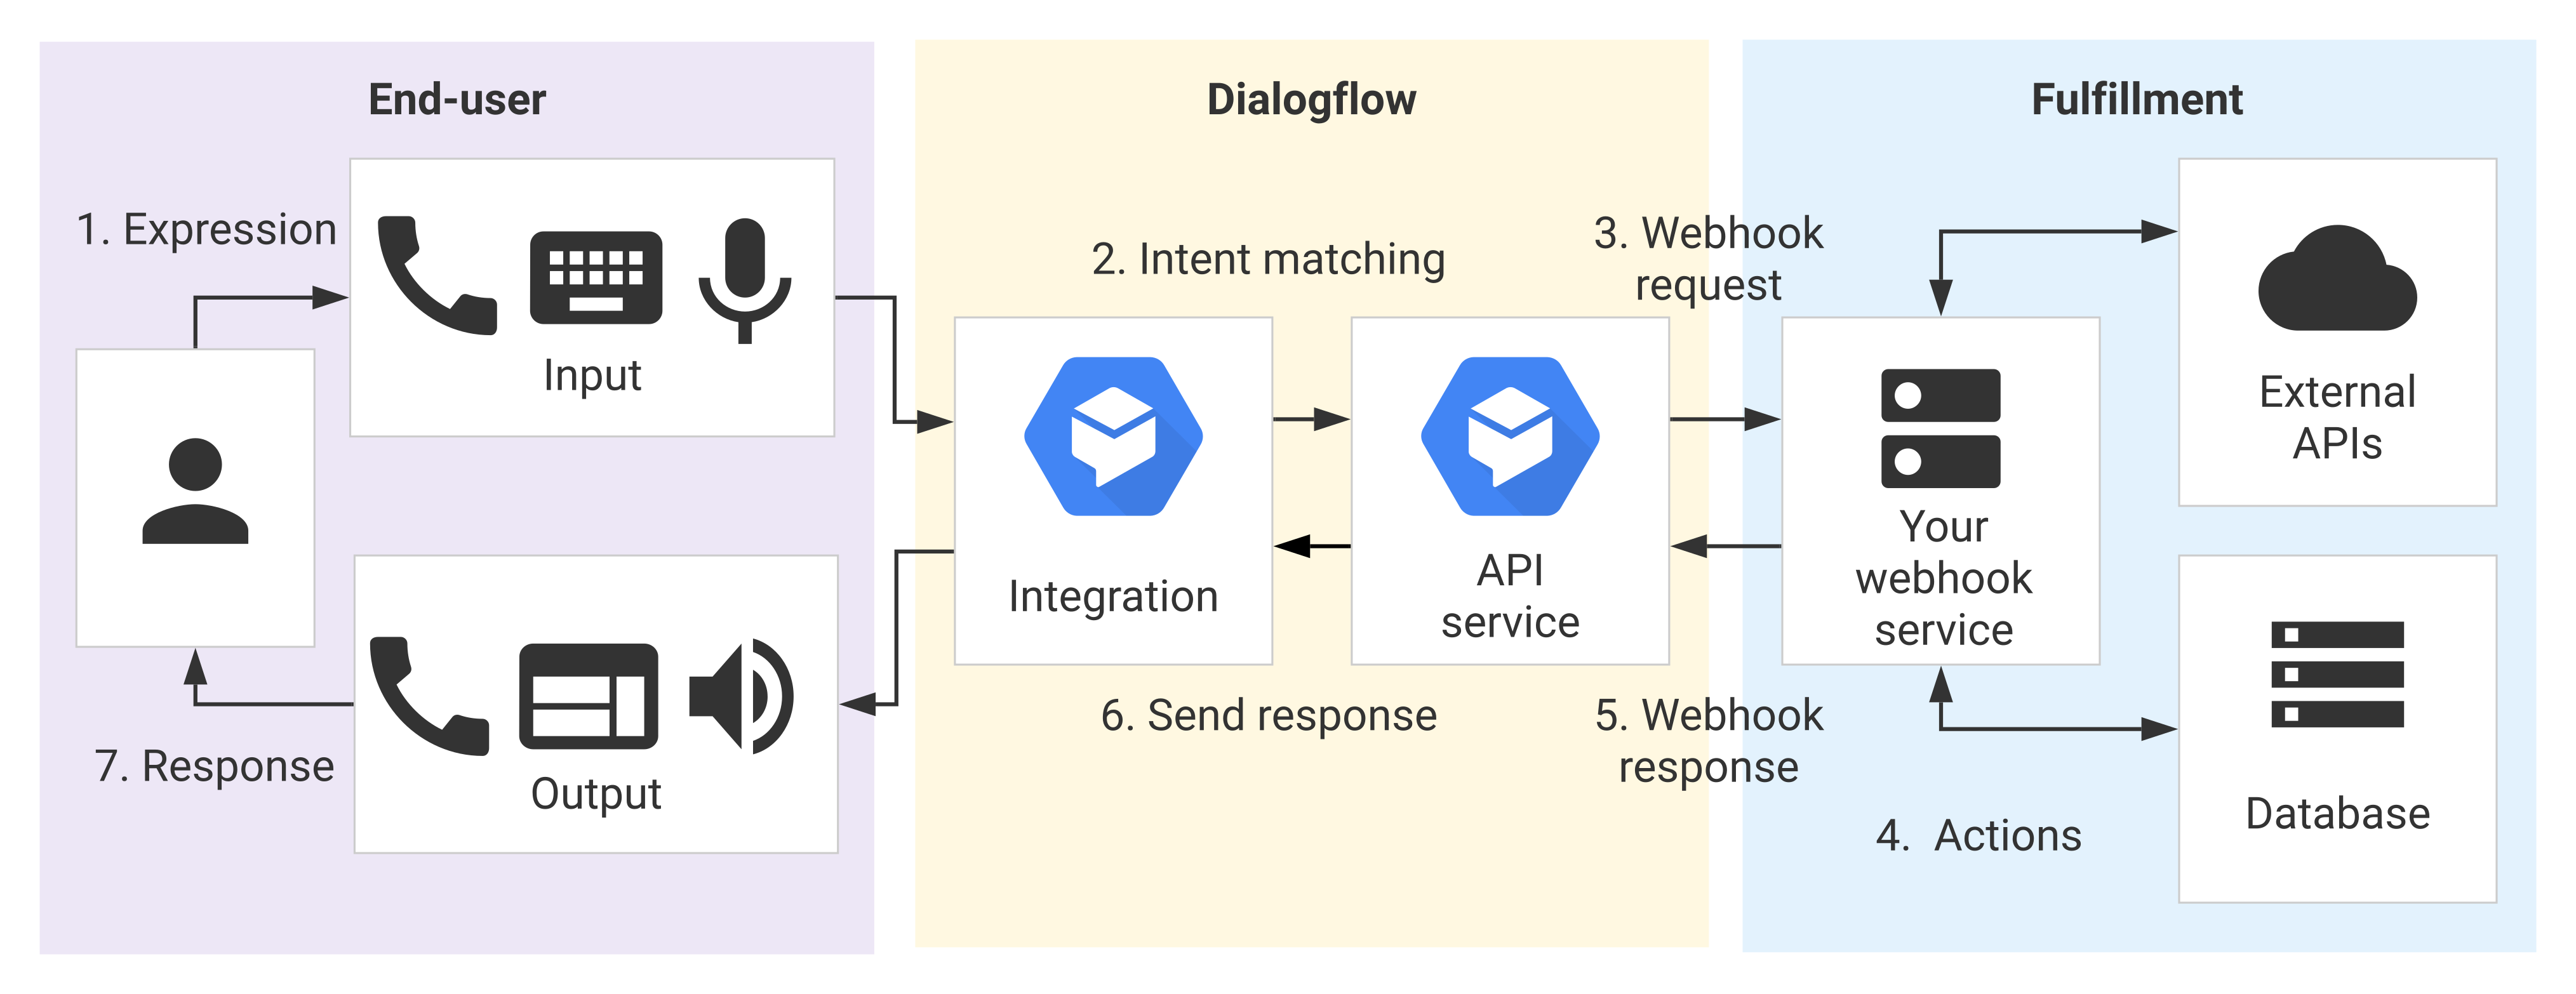 What is Dialogflow?